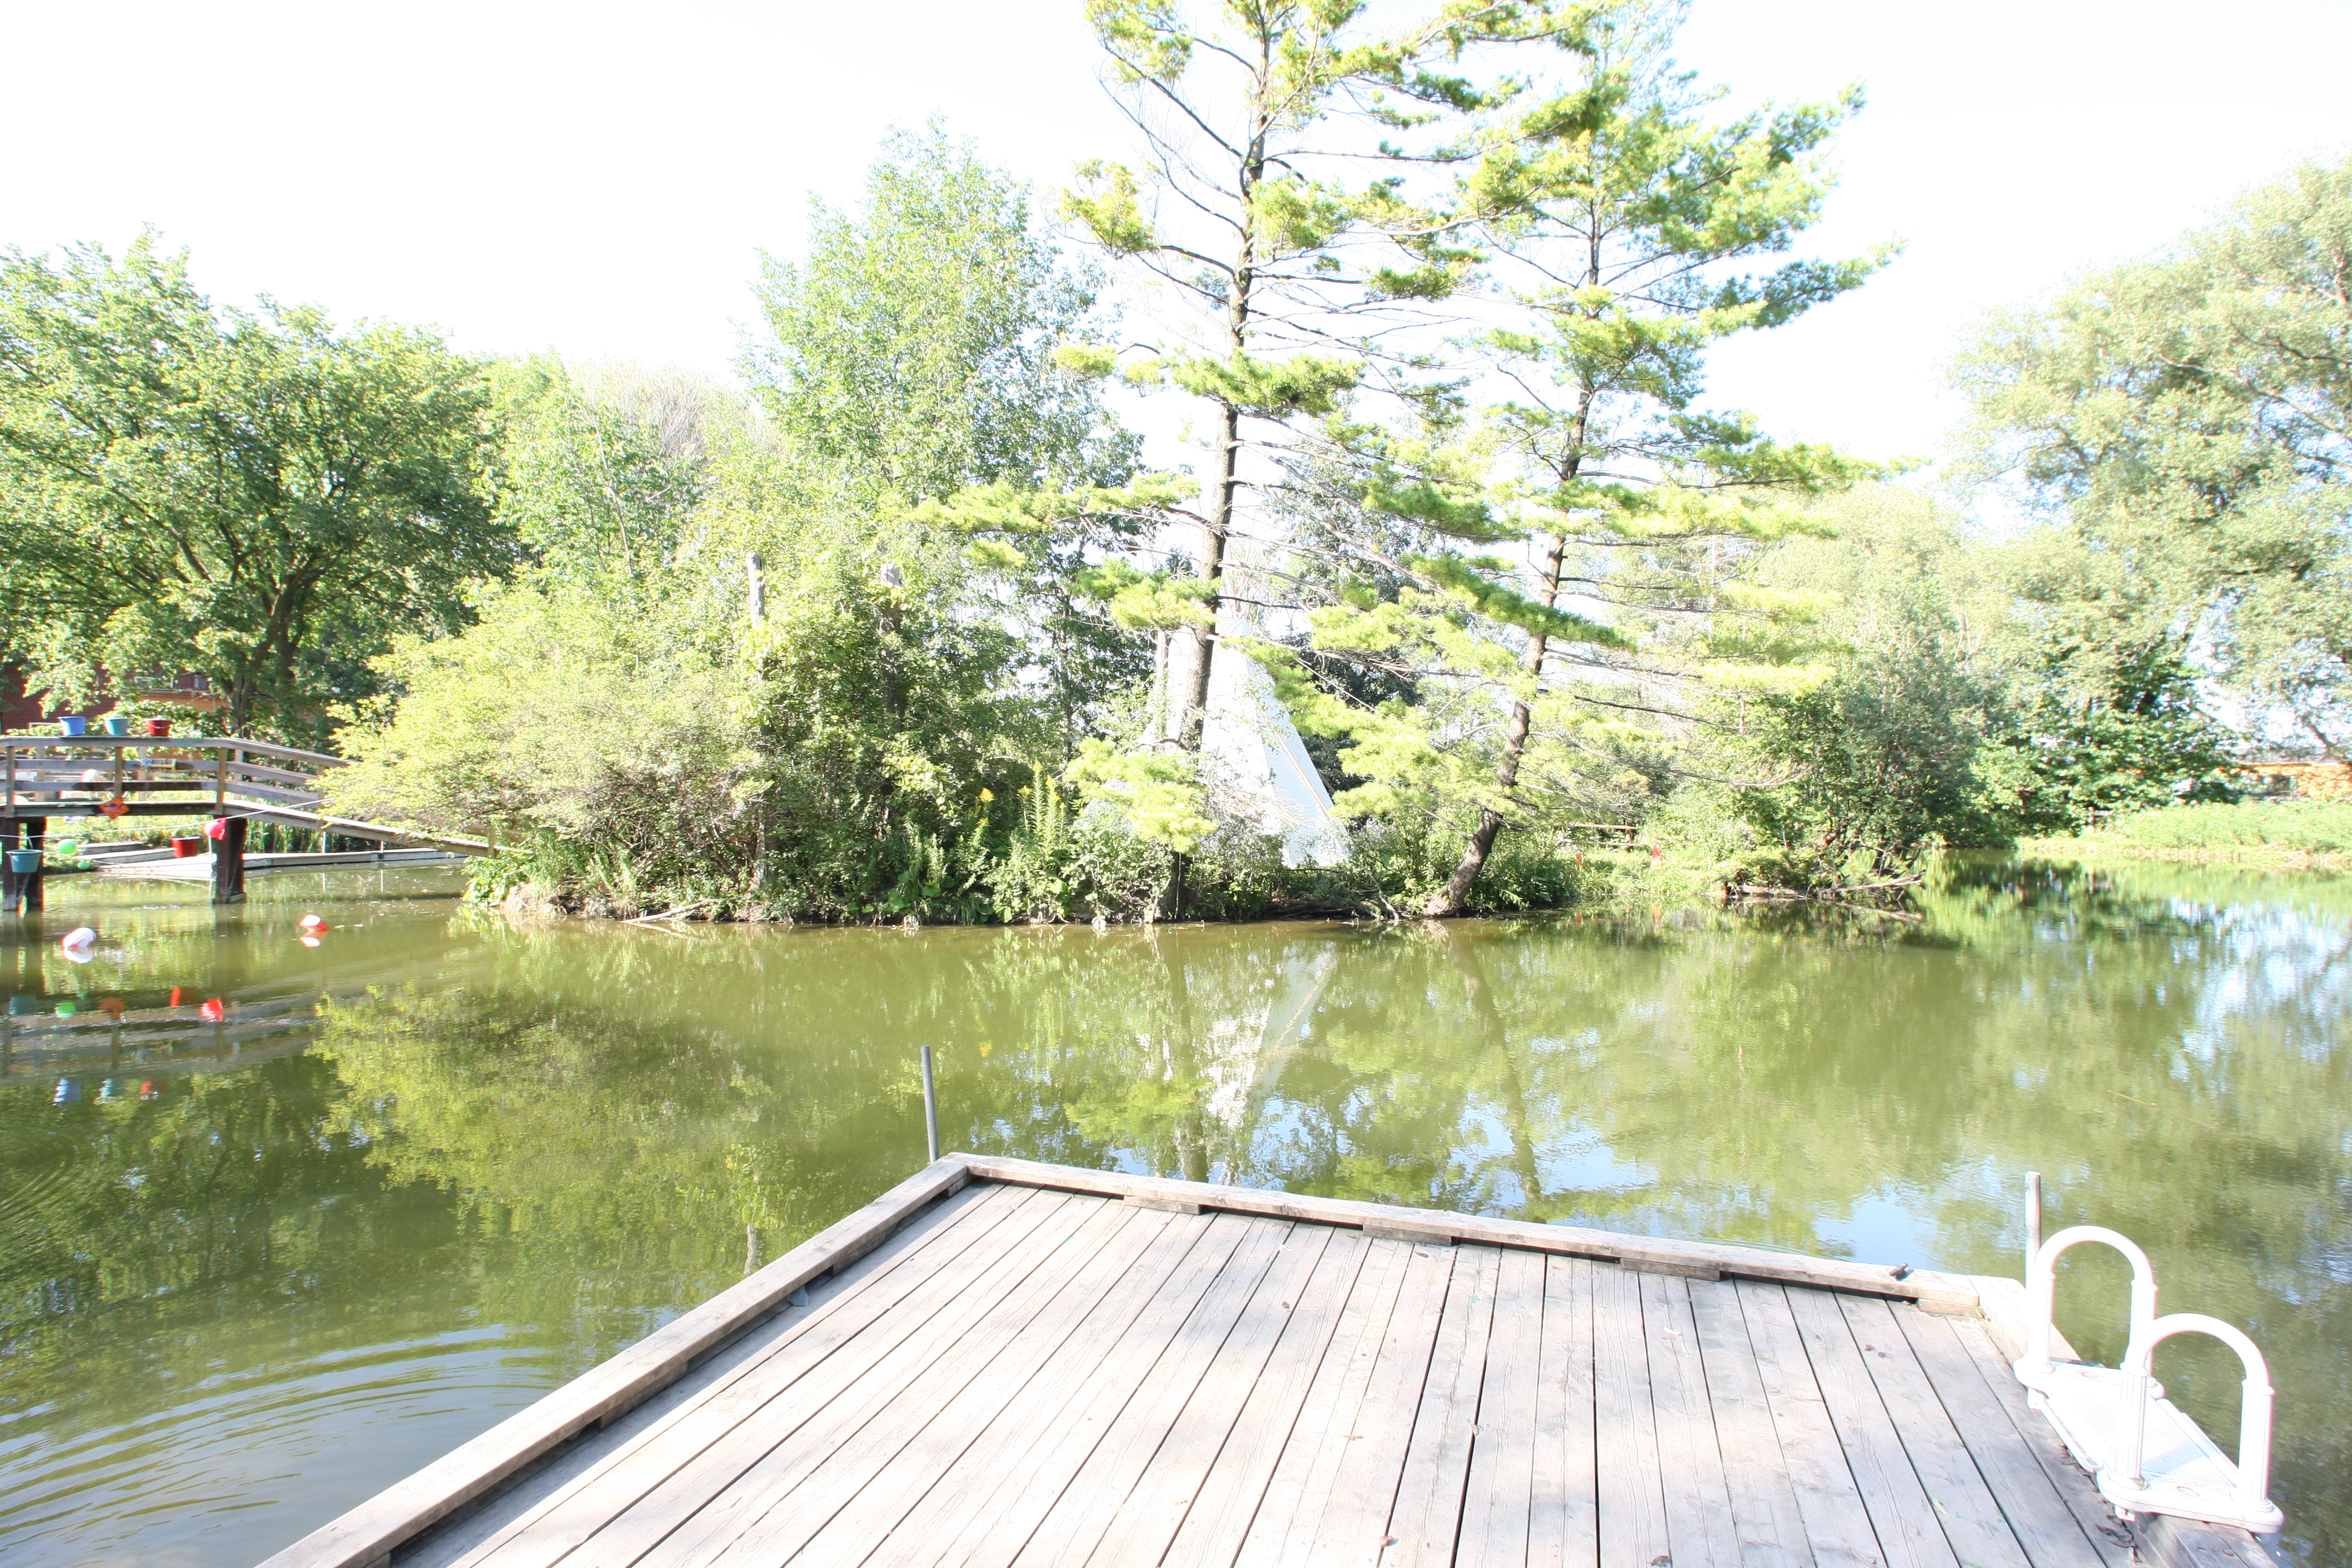 Canoe Pond